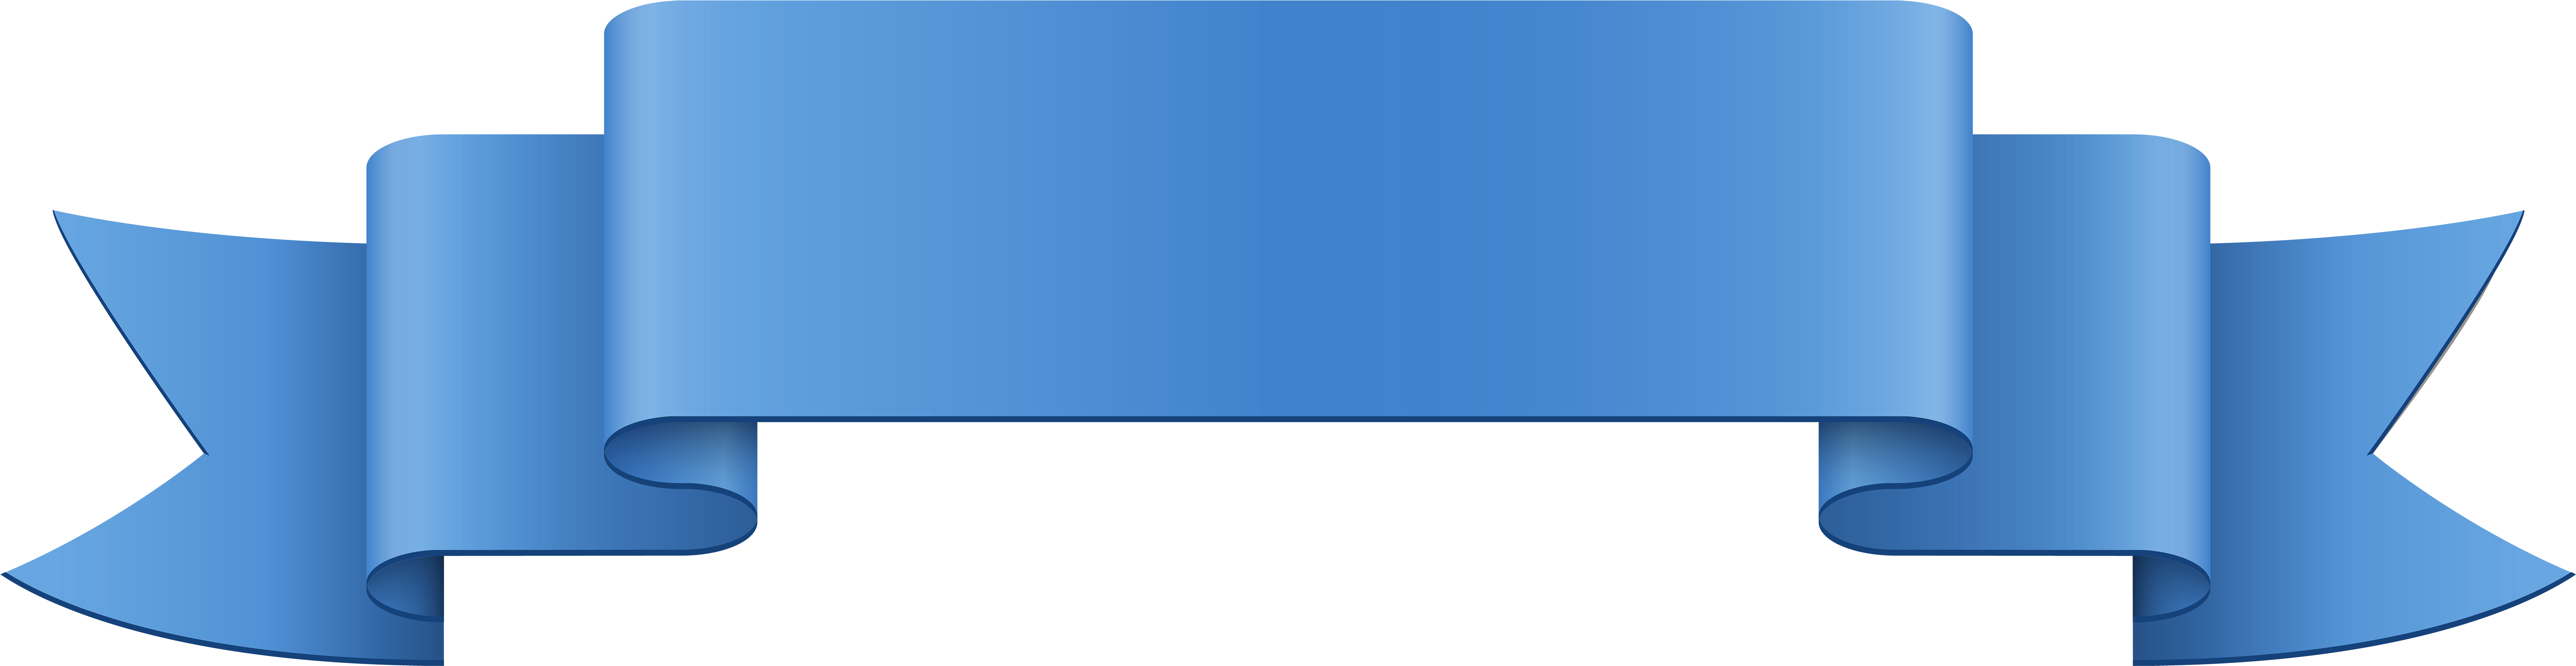 Banner Blue Clip Art Png Image - Blue Ribbon Banner Clipart (8000x2115)